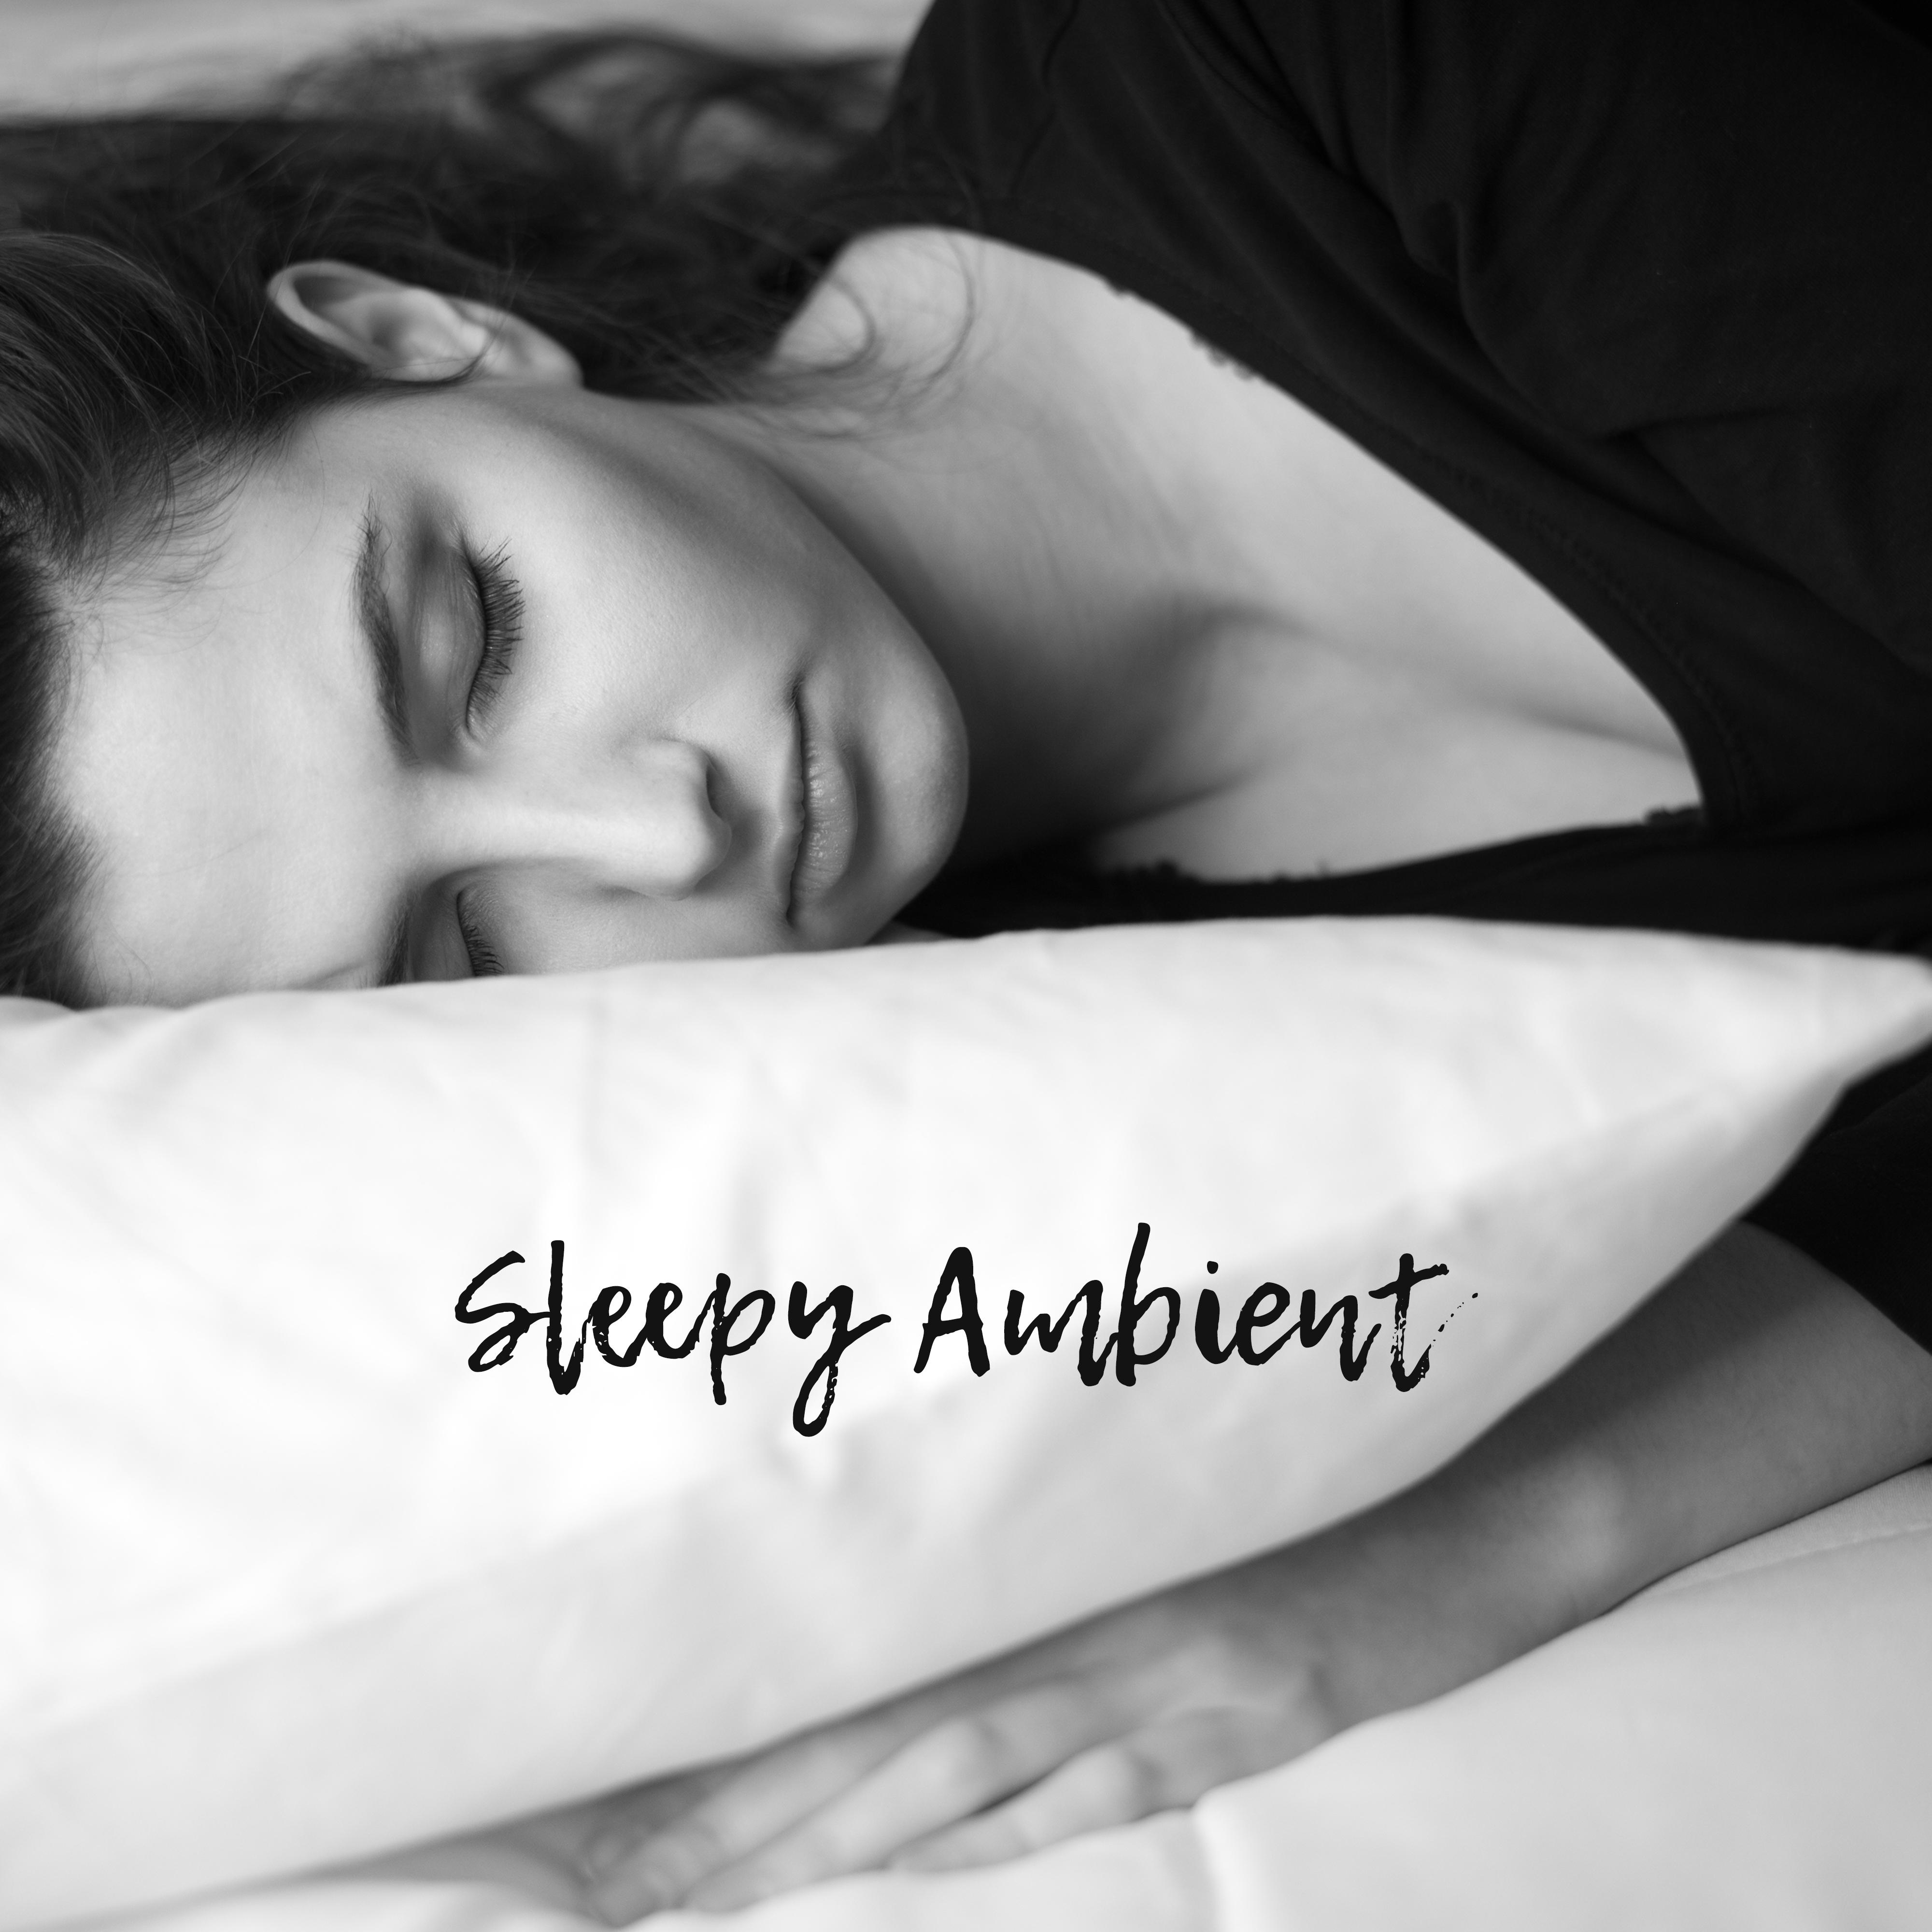 Sleepy Ambient - Music that will Rock to Sleep, Help to Fall Asleep and Provide a Deep Sleep